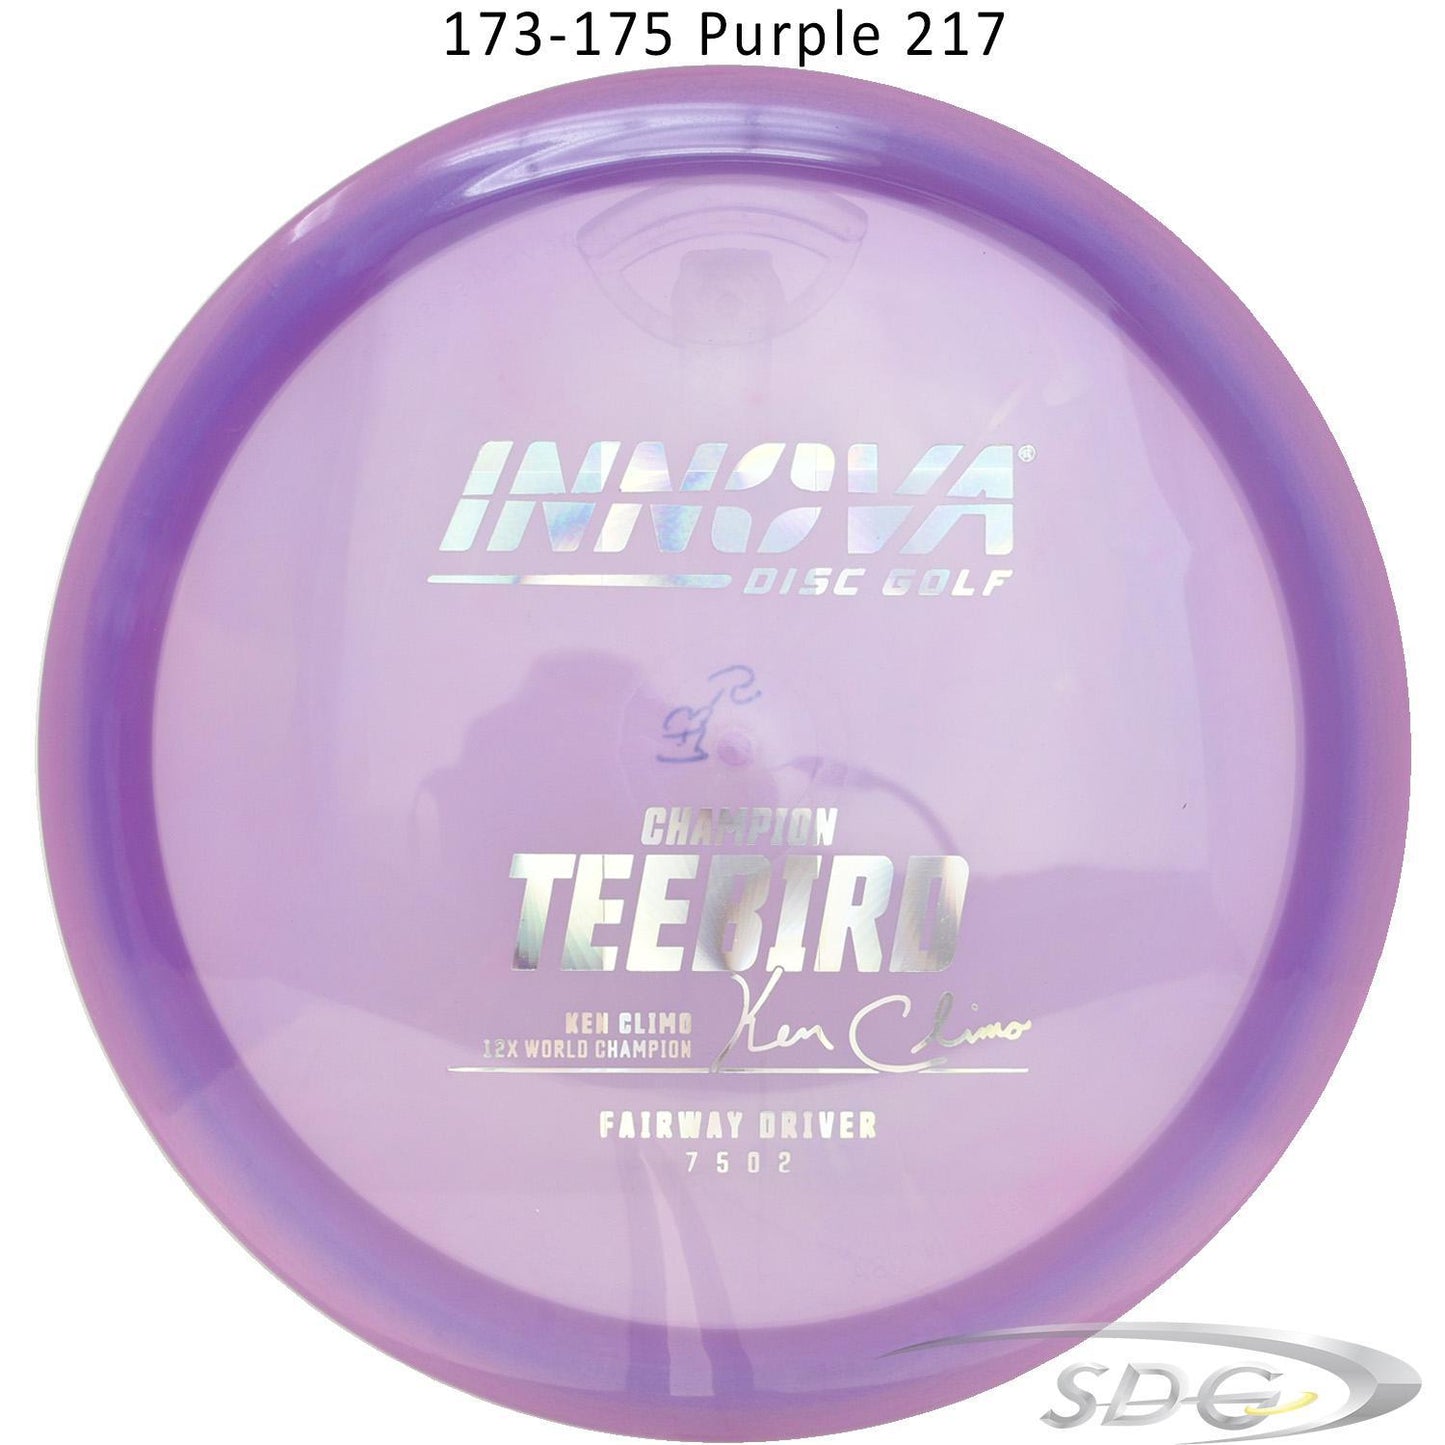 innova-champion-teebird-disc-golf-fairway-driver 173-175 Purple 217 